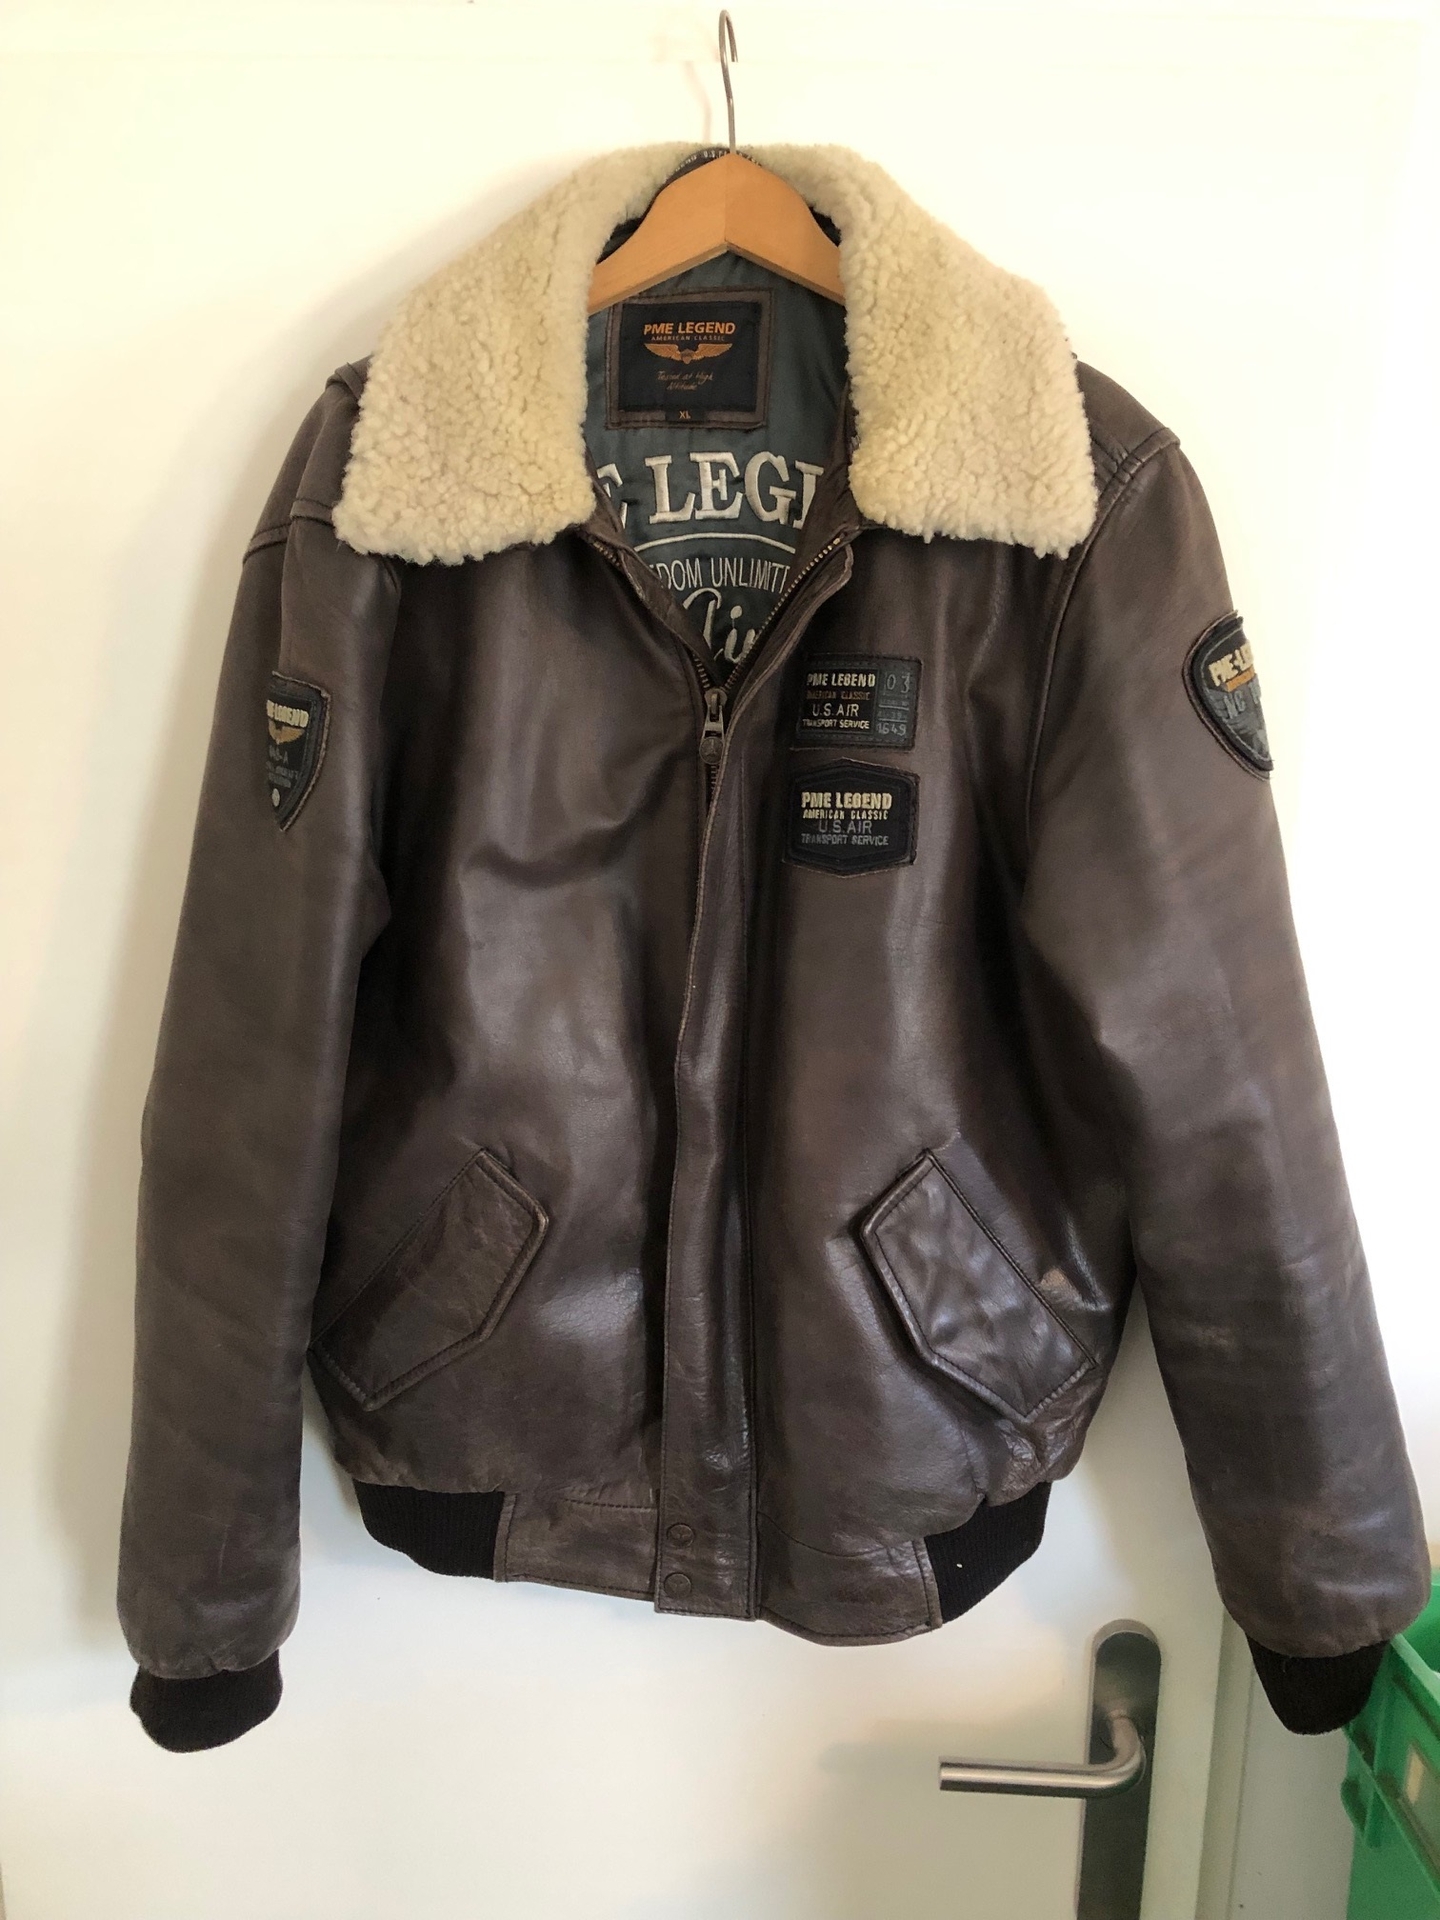 Weiland Nevelig Spreek luid PME Legend leather flight jacket size XL - the Aviation Store.net